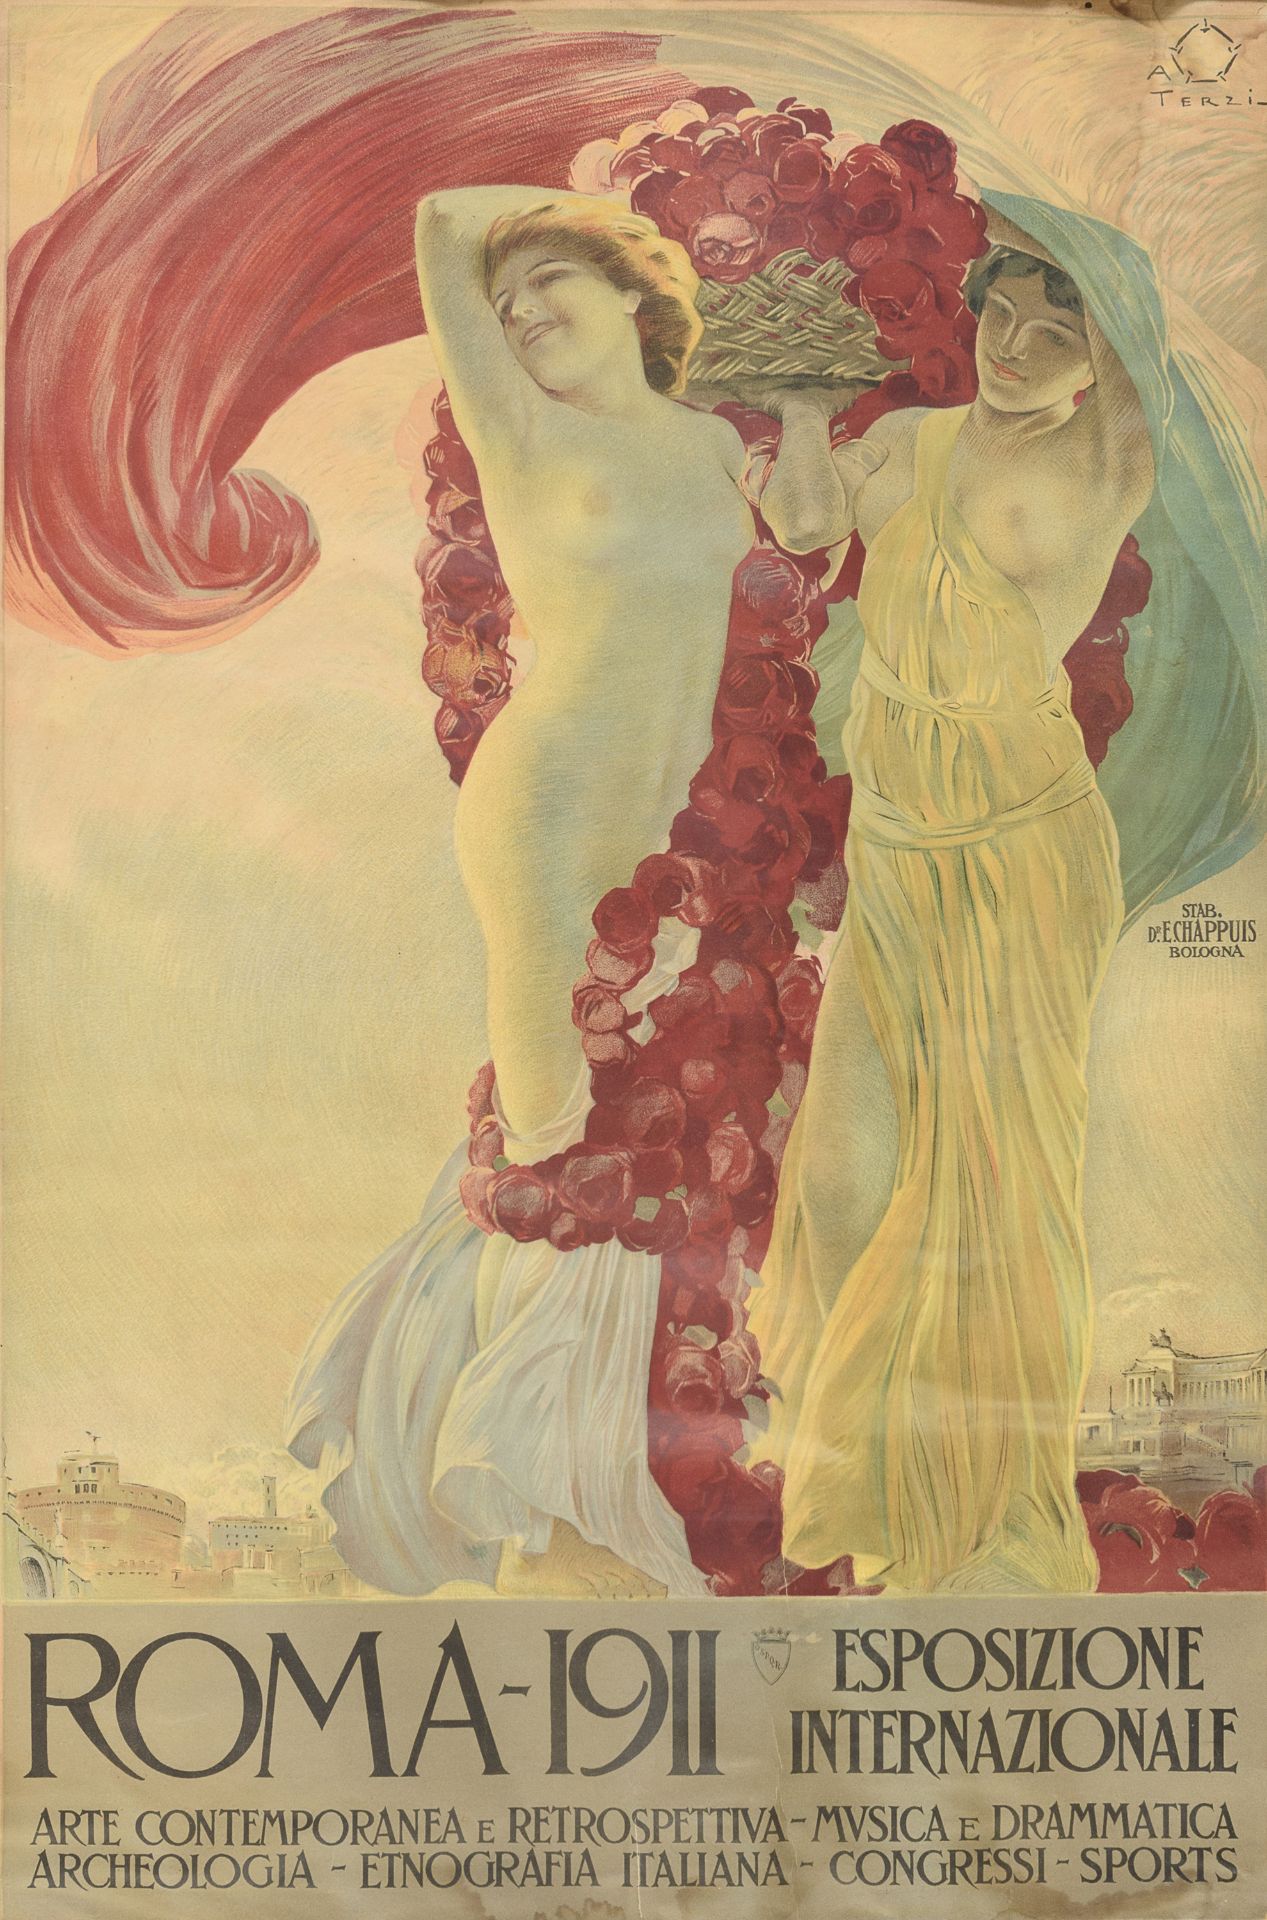 POSTER BY ALEARDO TERZI 1911